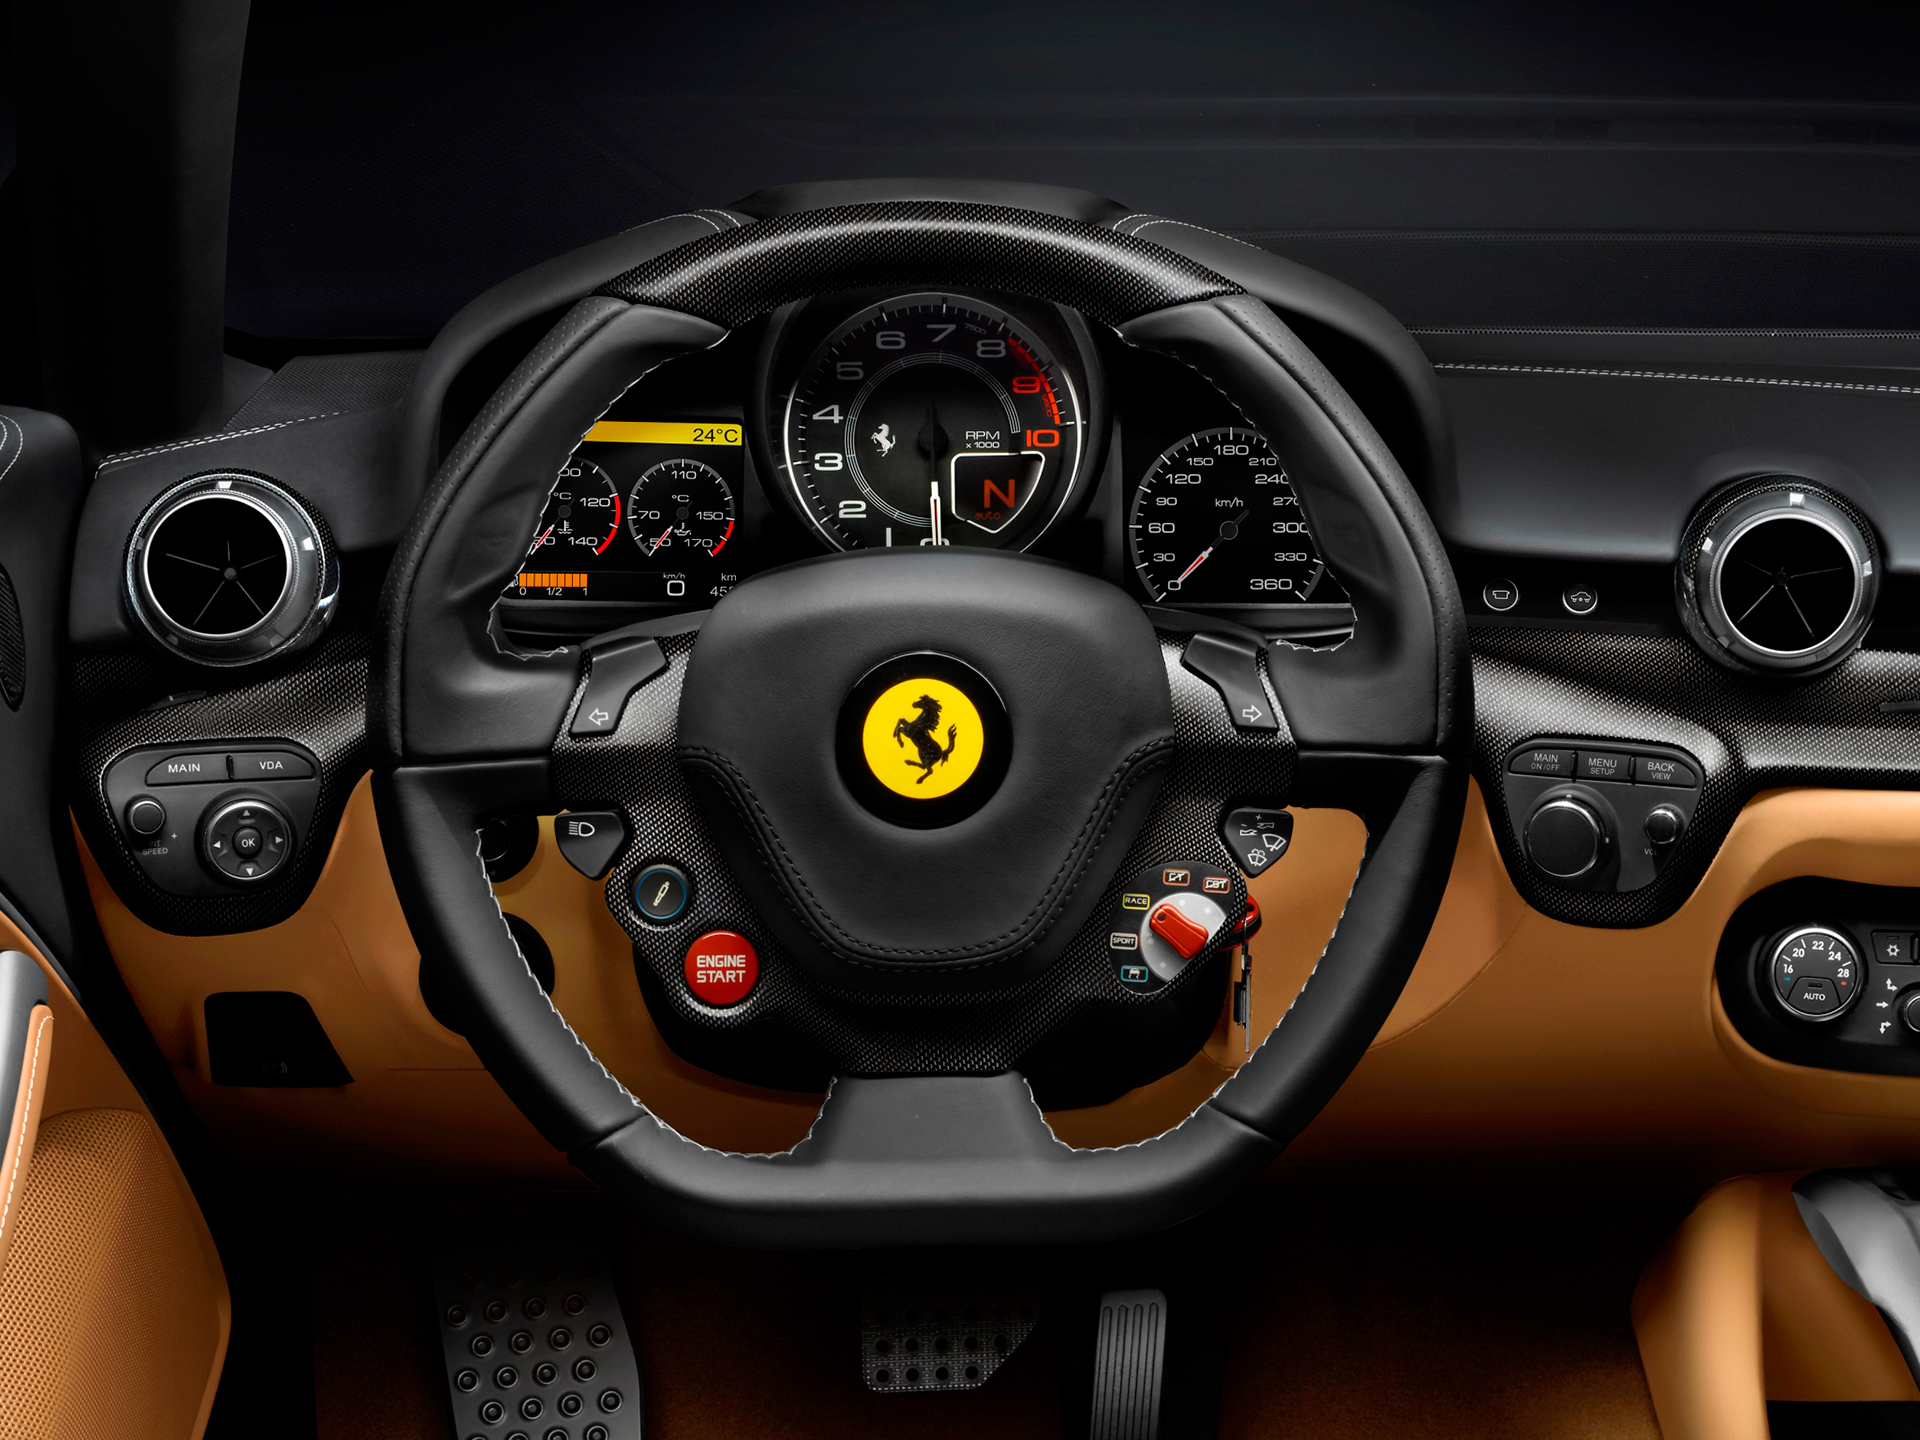 Ferrari F12berlinetta - volant / racing wheel